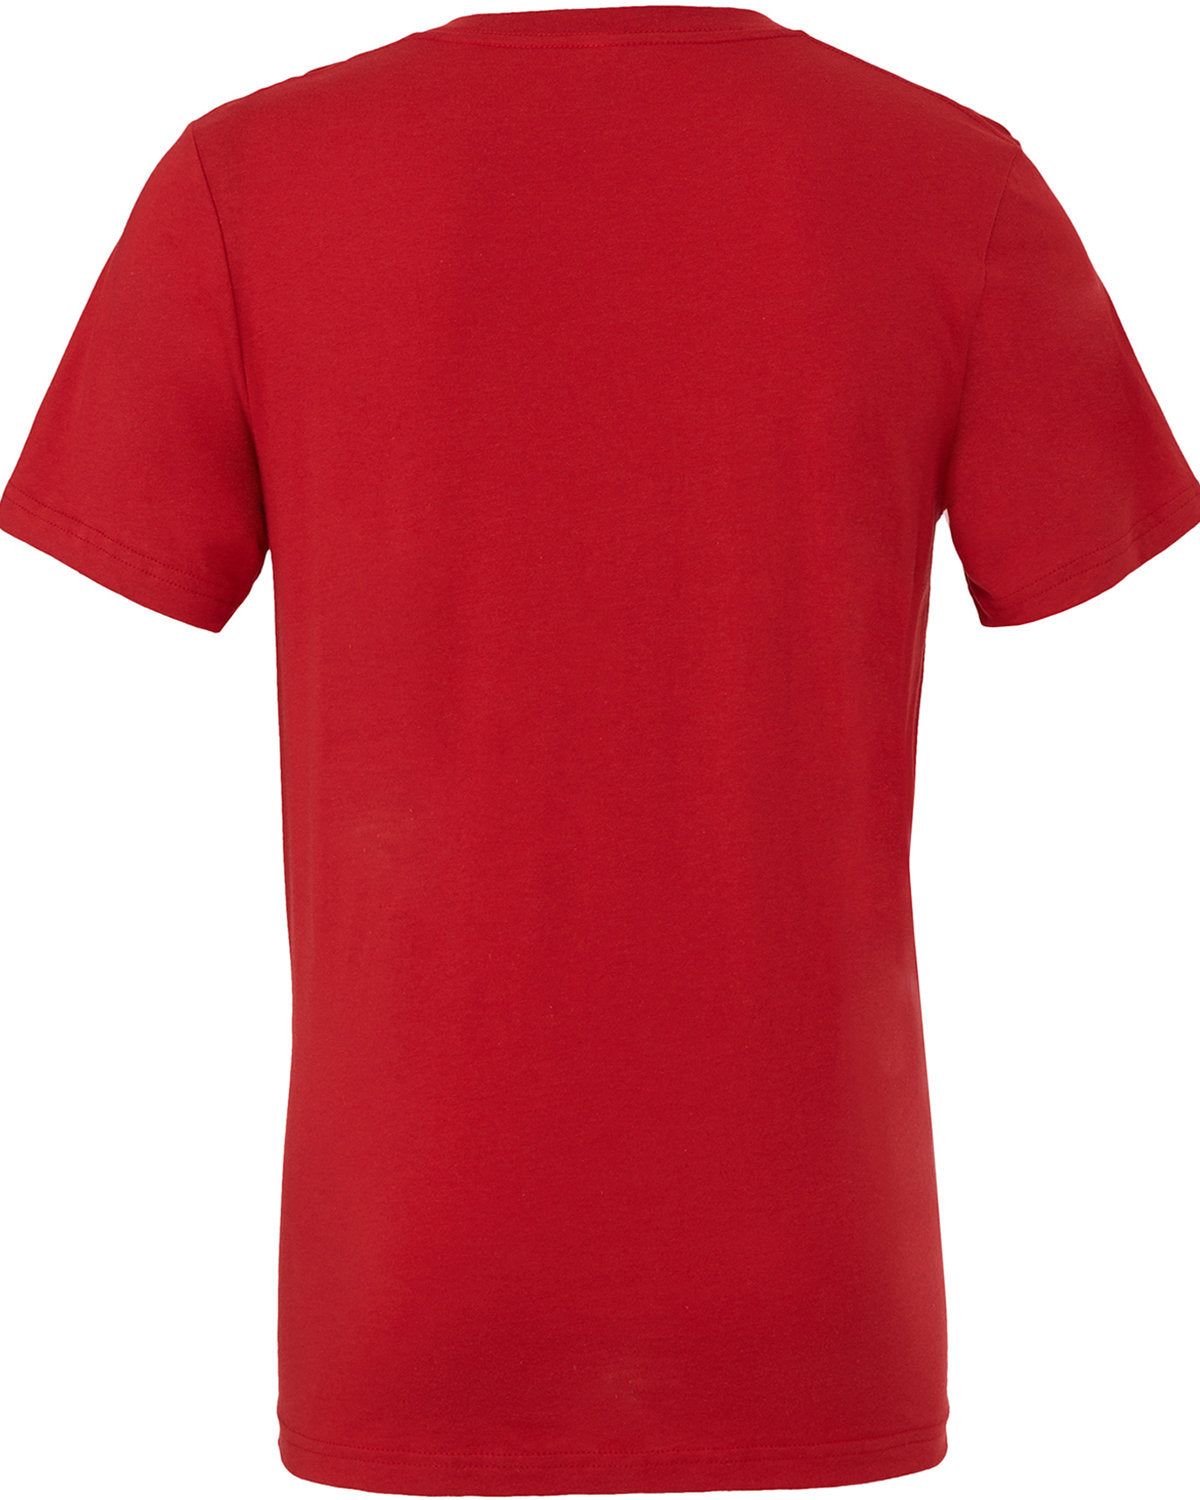 UNISEX Short-Sleeve V-Neck T-Shirt